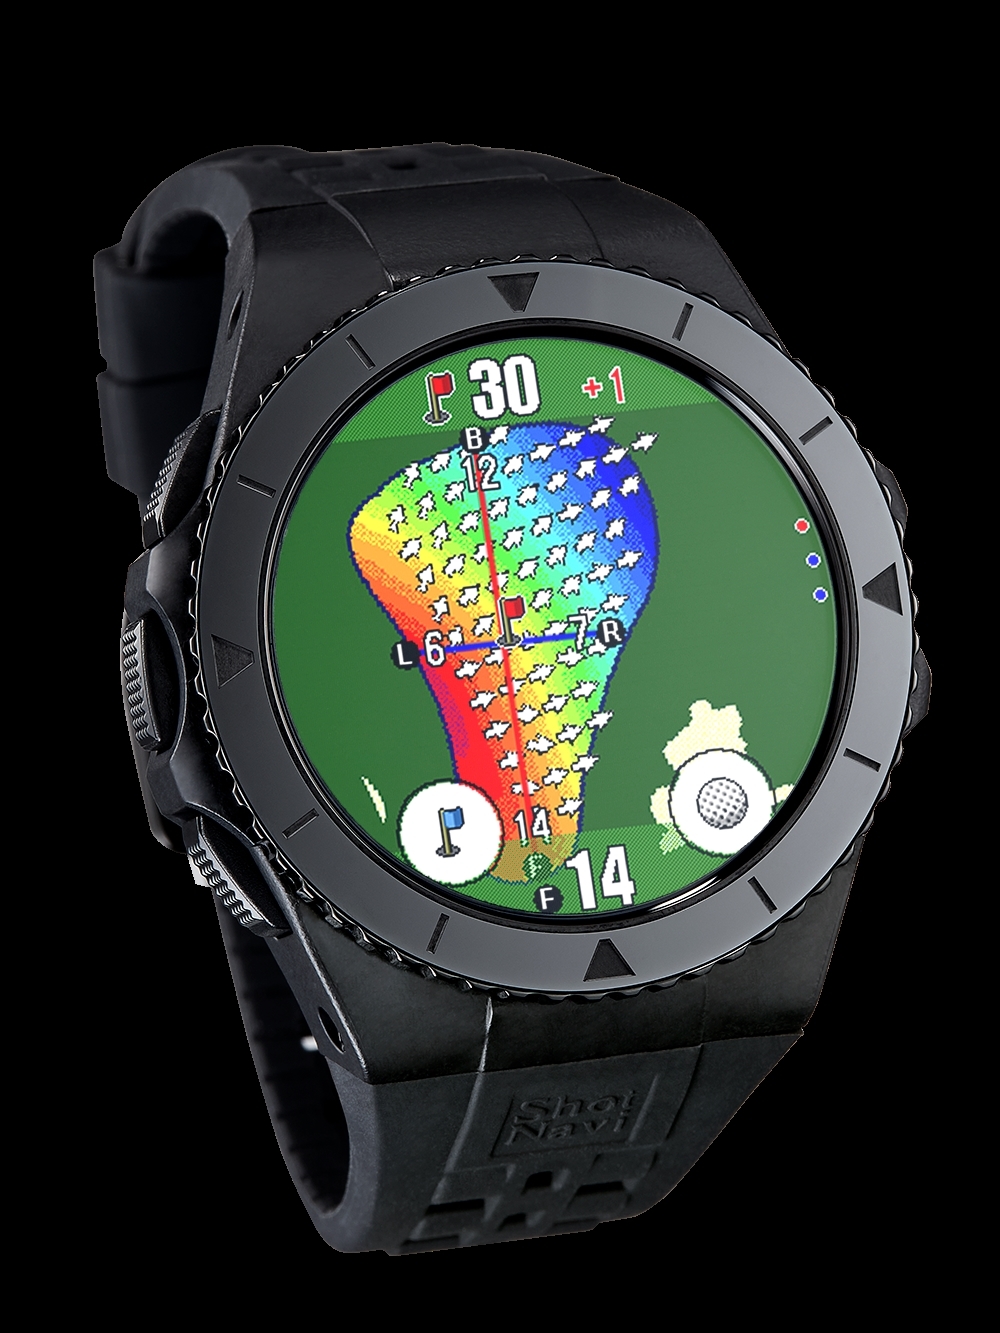 Shot Naviより、腕時計型GPSゴルフナビの新機能
「Dynamic Green Eye＆スロープディレクション」
「テンプアジャスト」「スイングテンポ」を搭載した
最上級モデルShot Navi『EXCEEDS』を2月22日発売